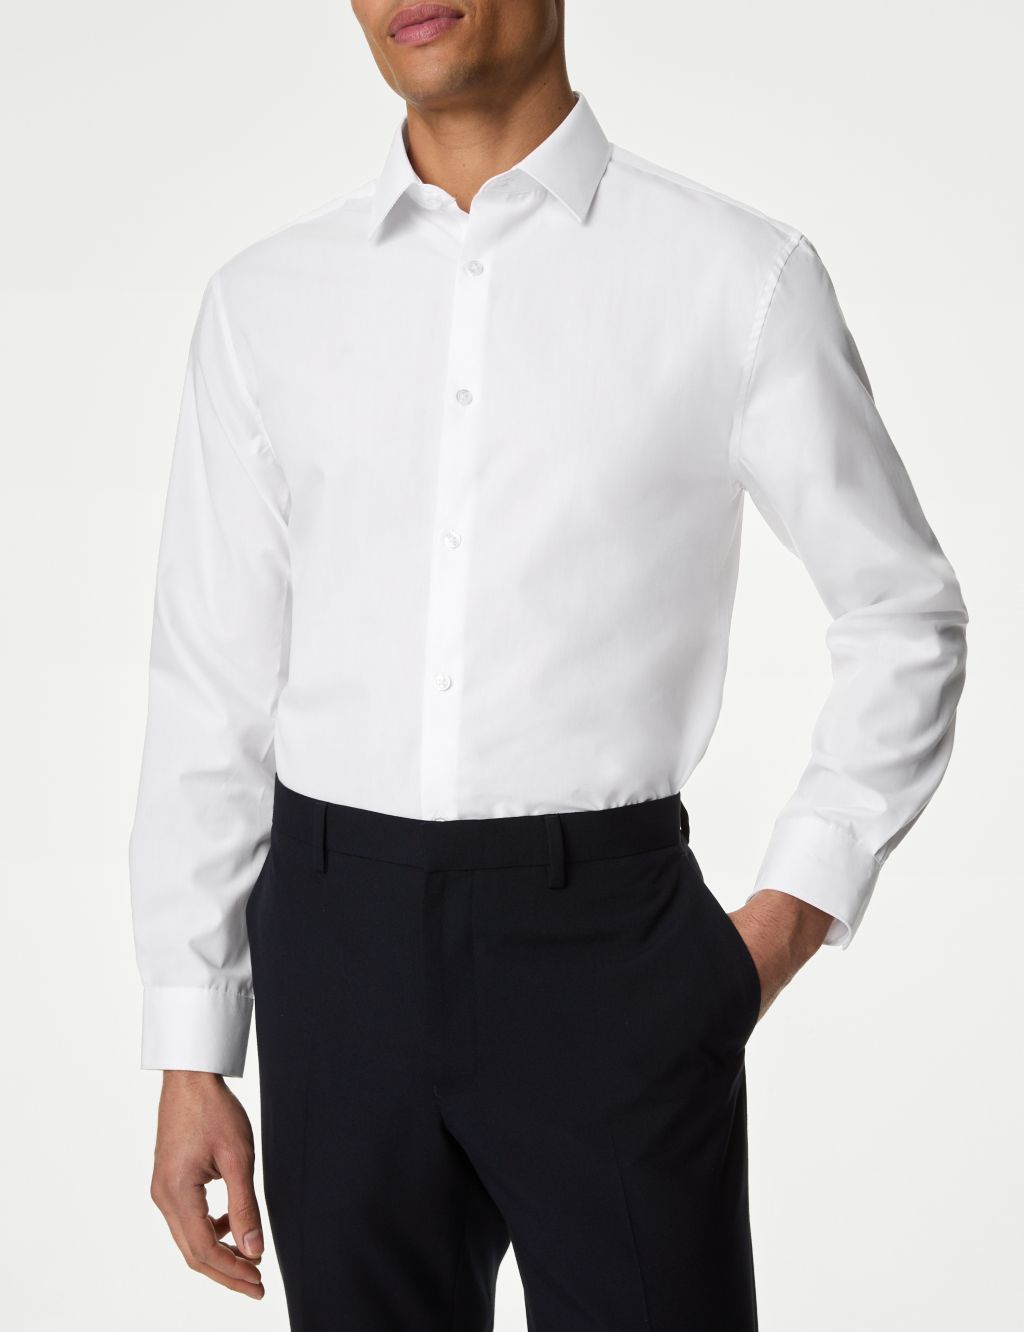 NWT : M&S White & Wine Pinstriped Shirt : Swap NWT or Buy